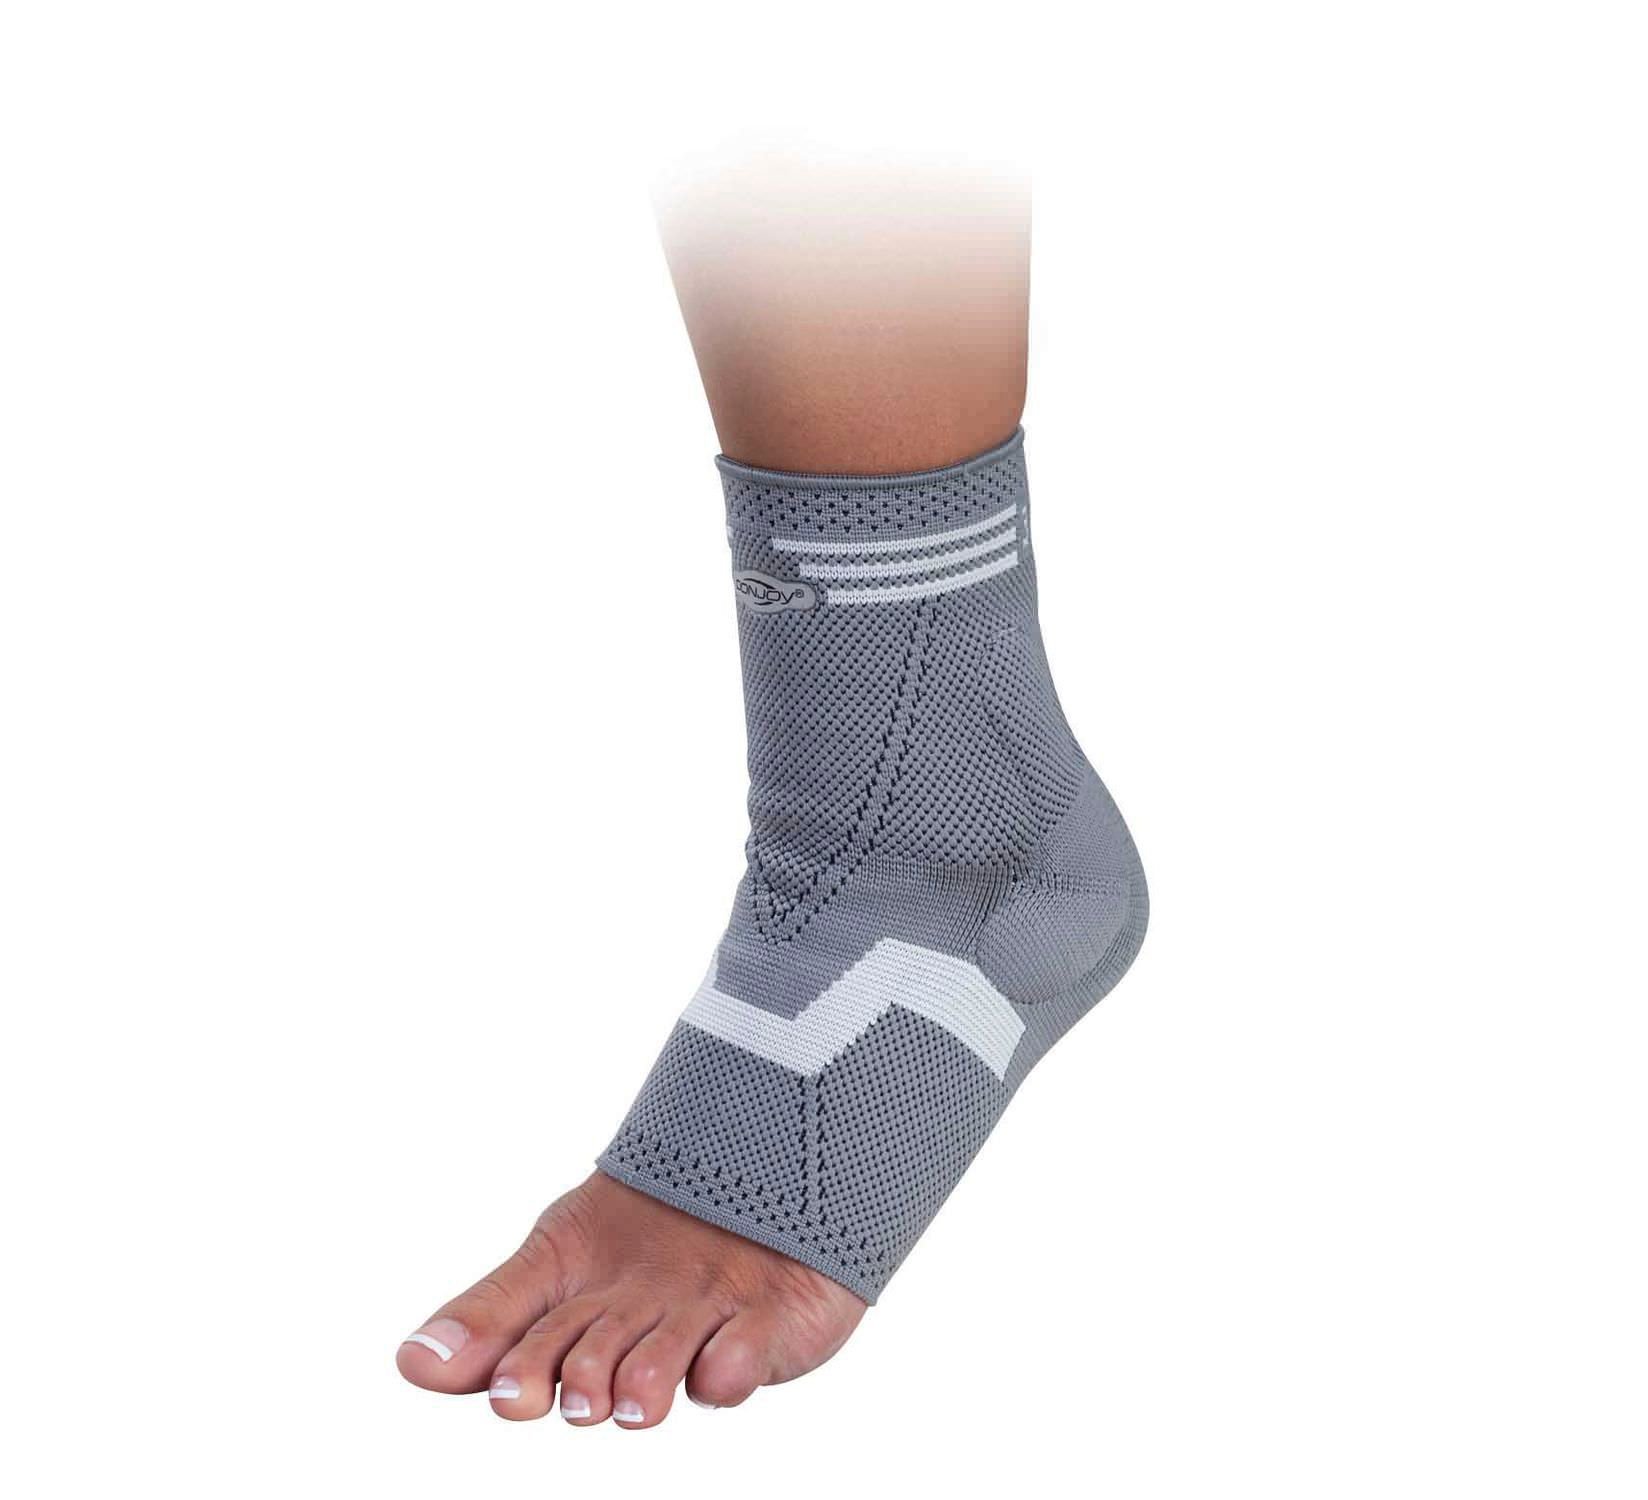 Ankle sleeve (orthopedic immobilization) / with malleolar pad Malolax™ Elastic Ankle DonJoy